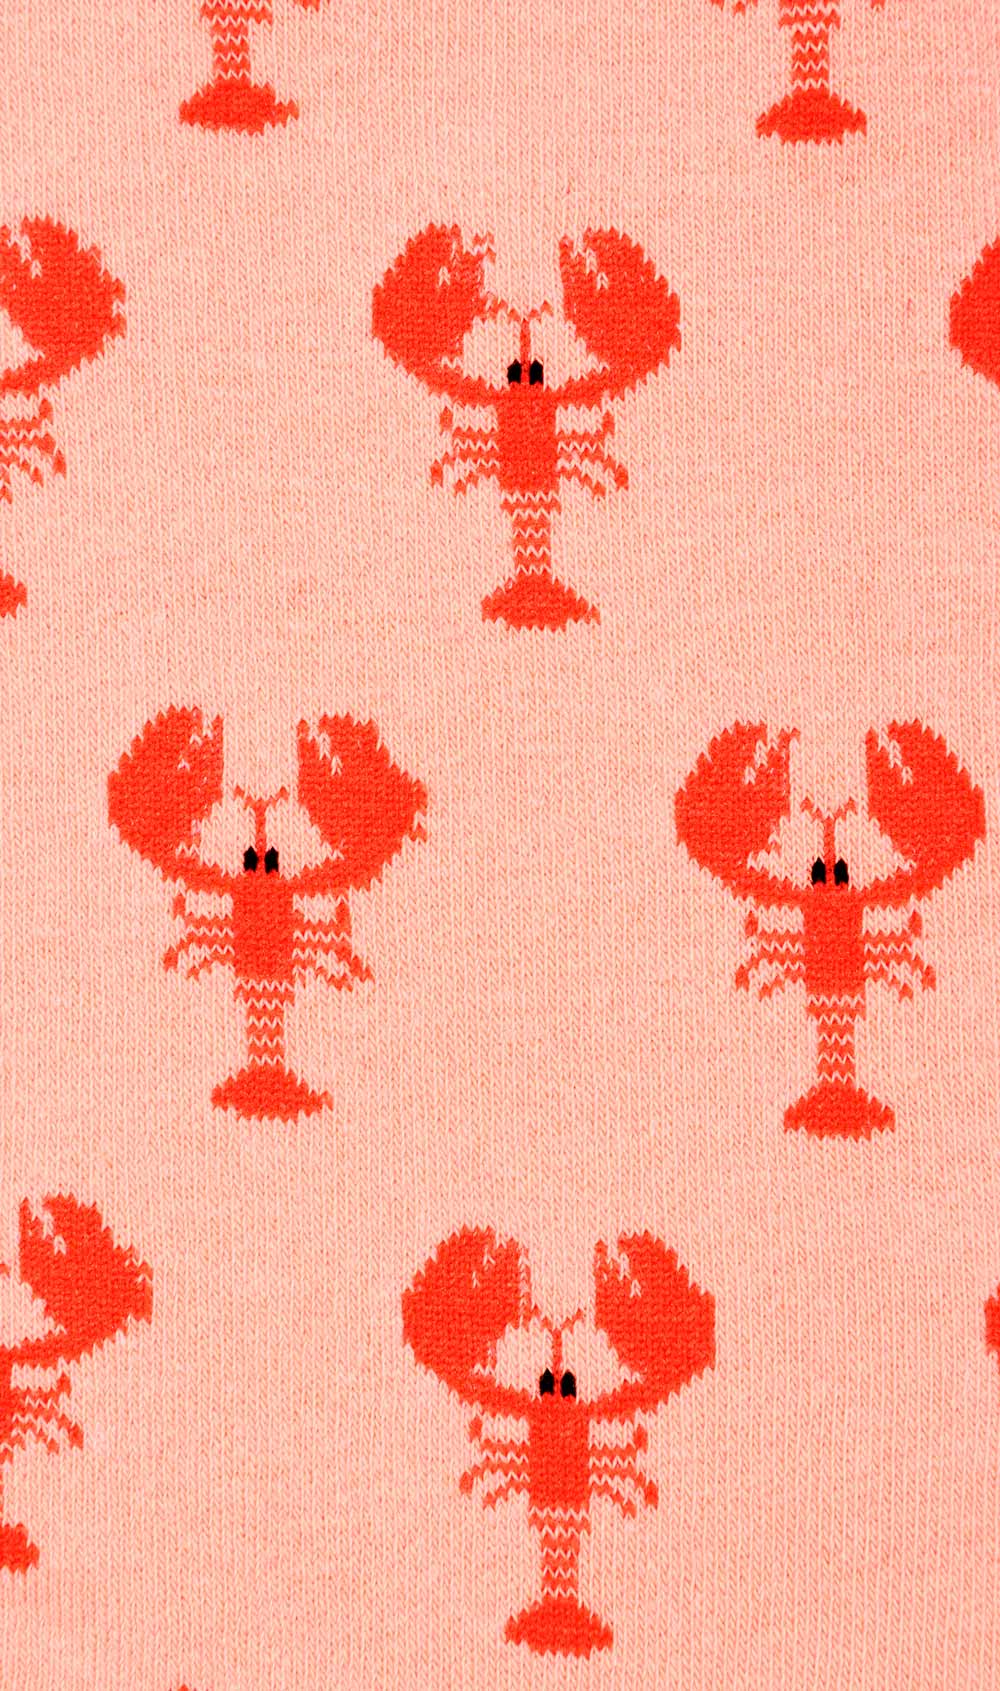 Red Lobster Socks Fabric